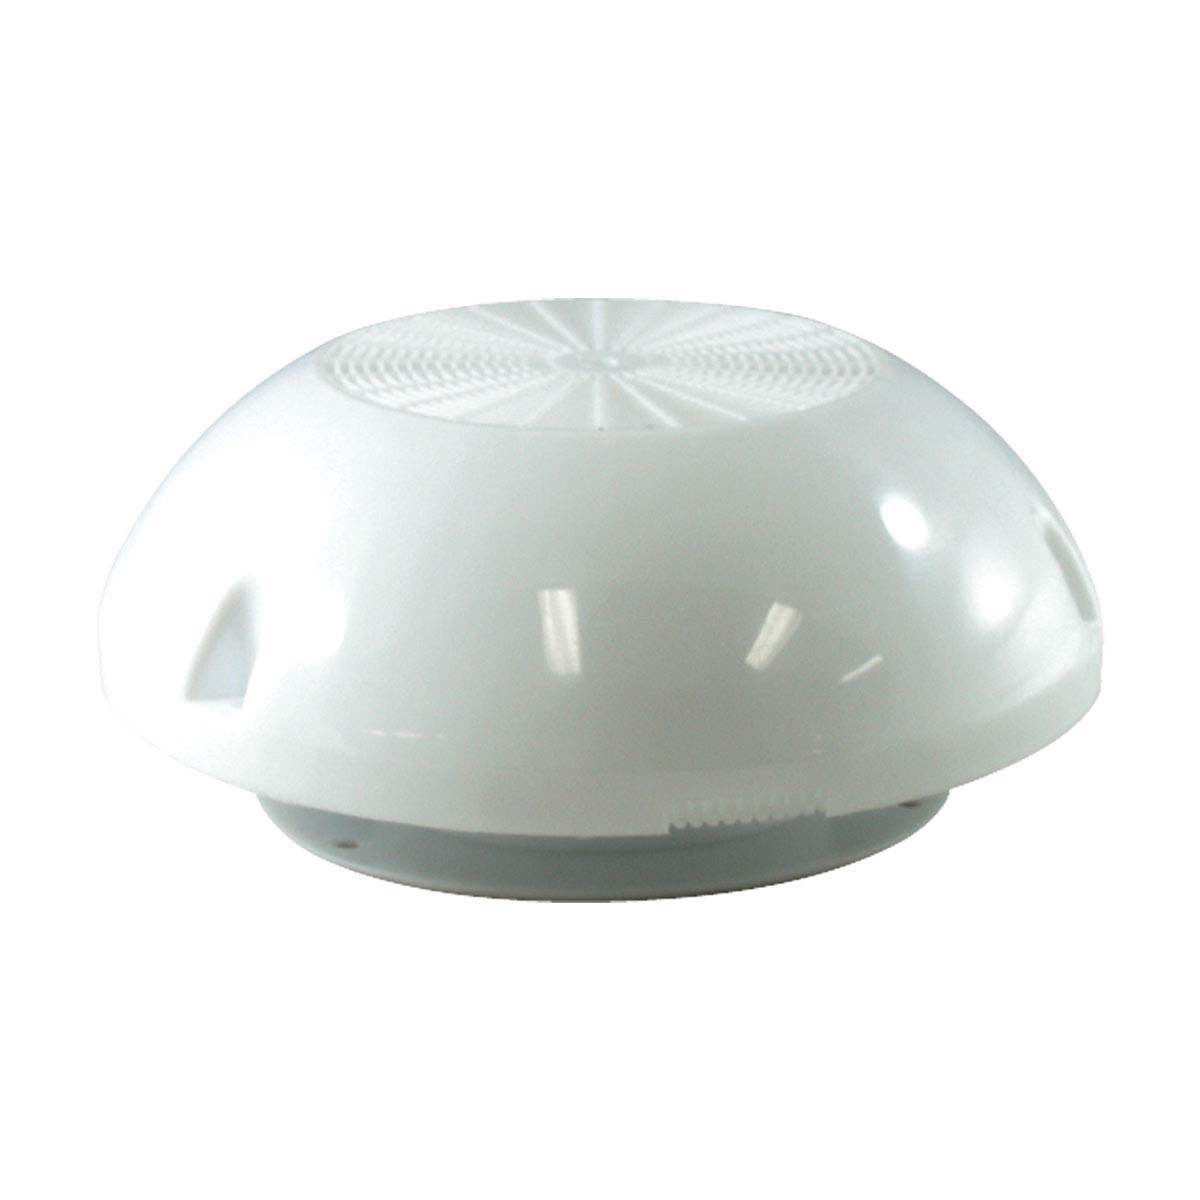 BLA 203mm White Plastic Dorade Dome Vent